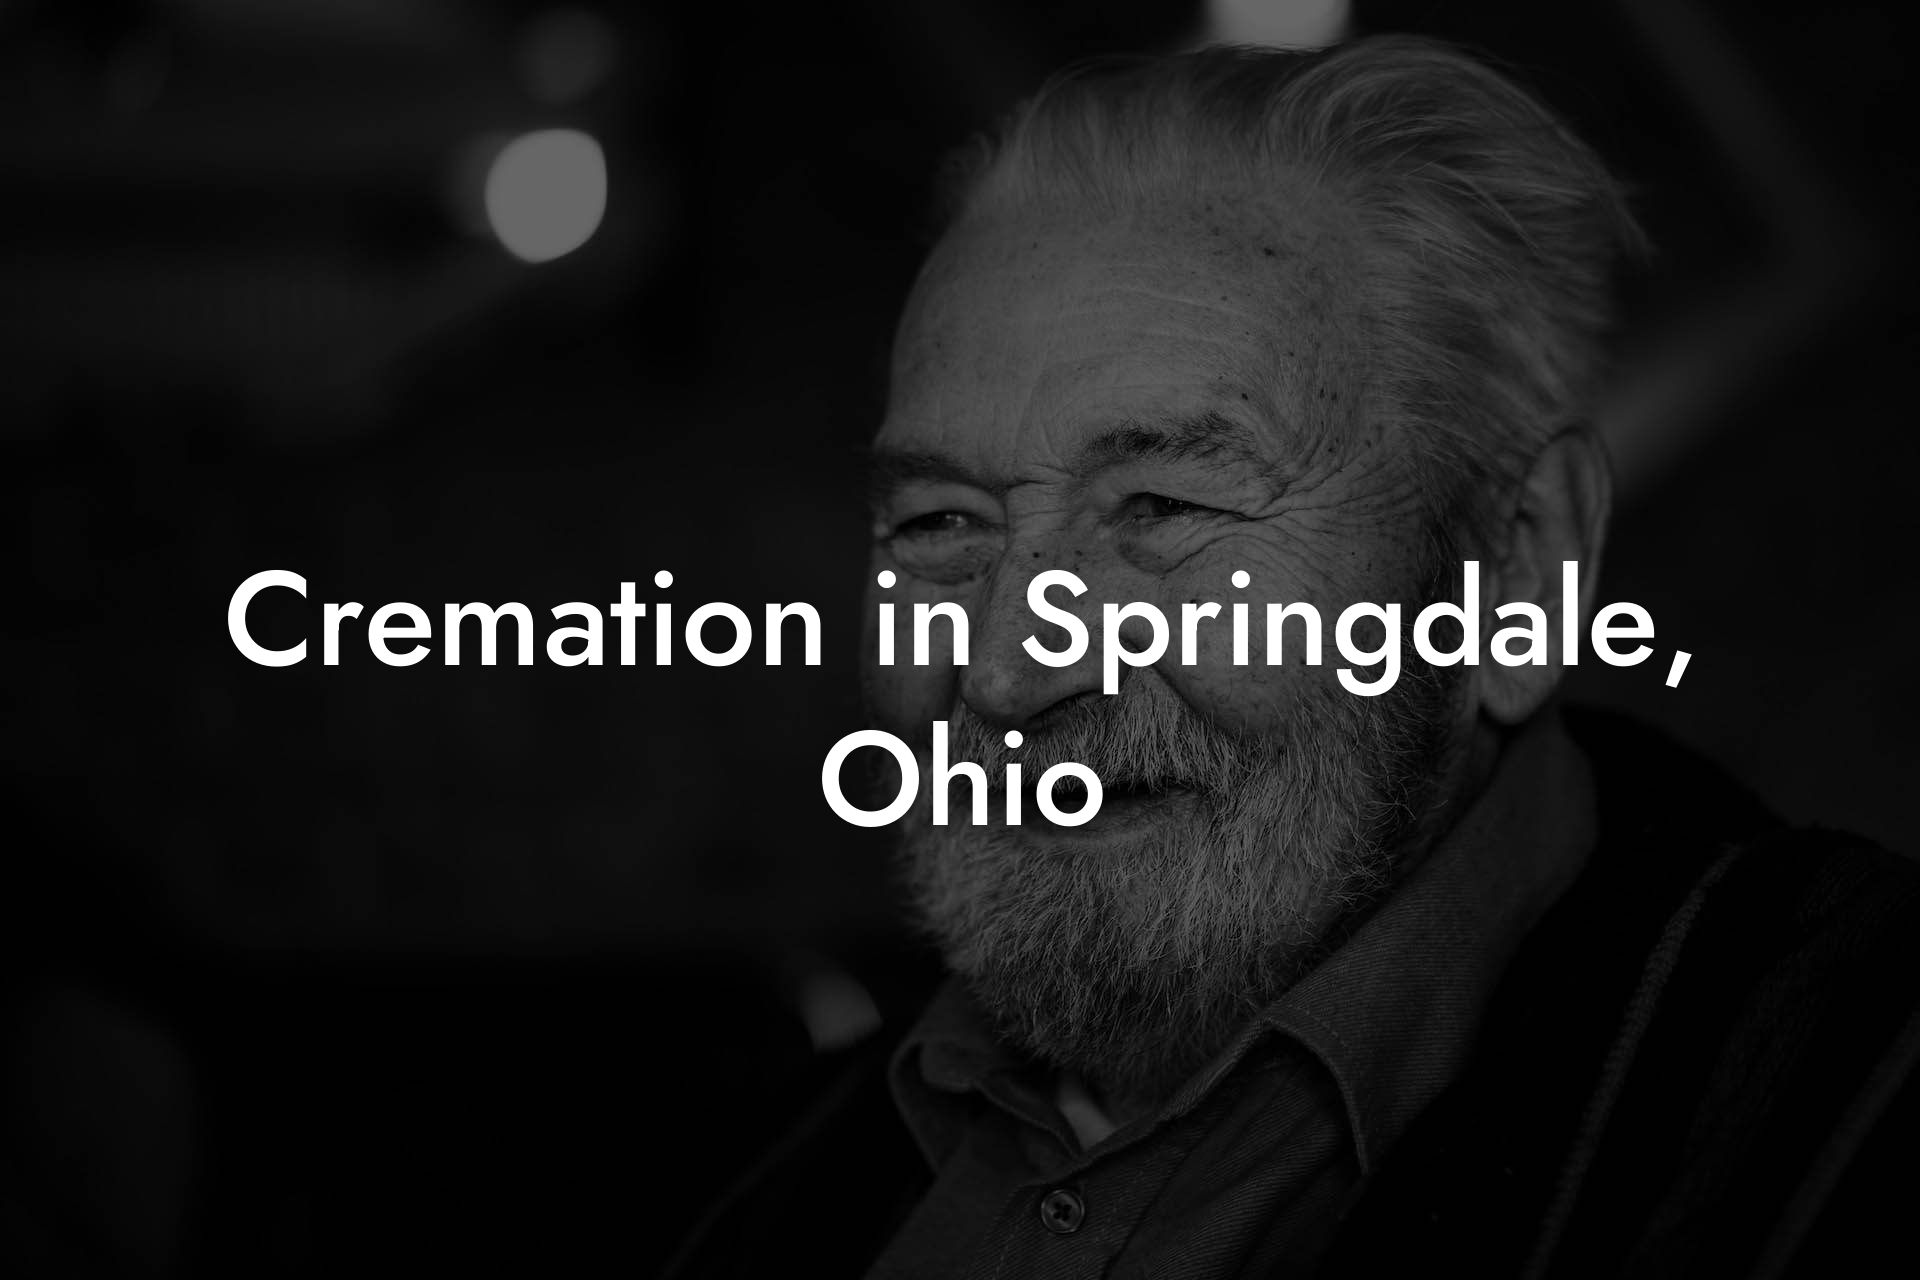 Cremation in Springdale, Ohio